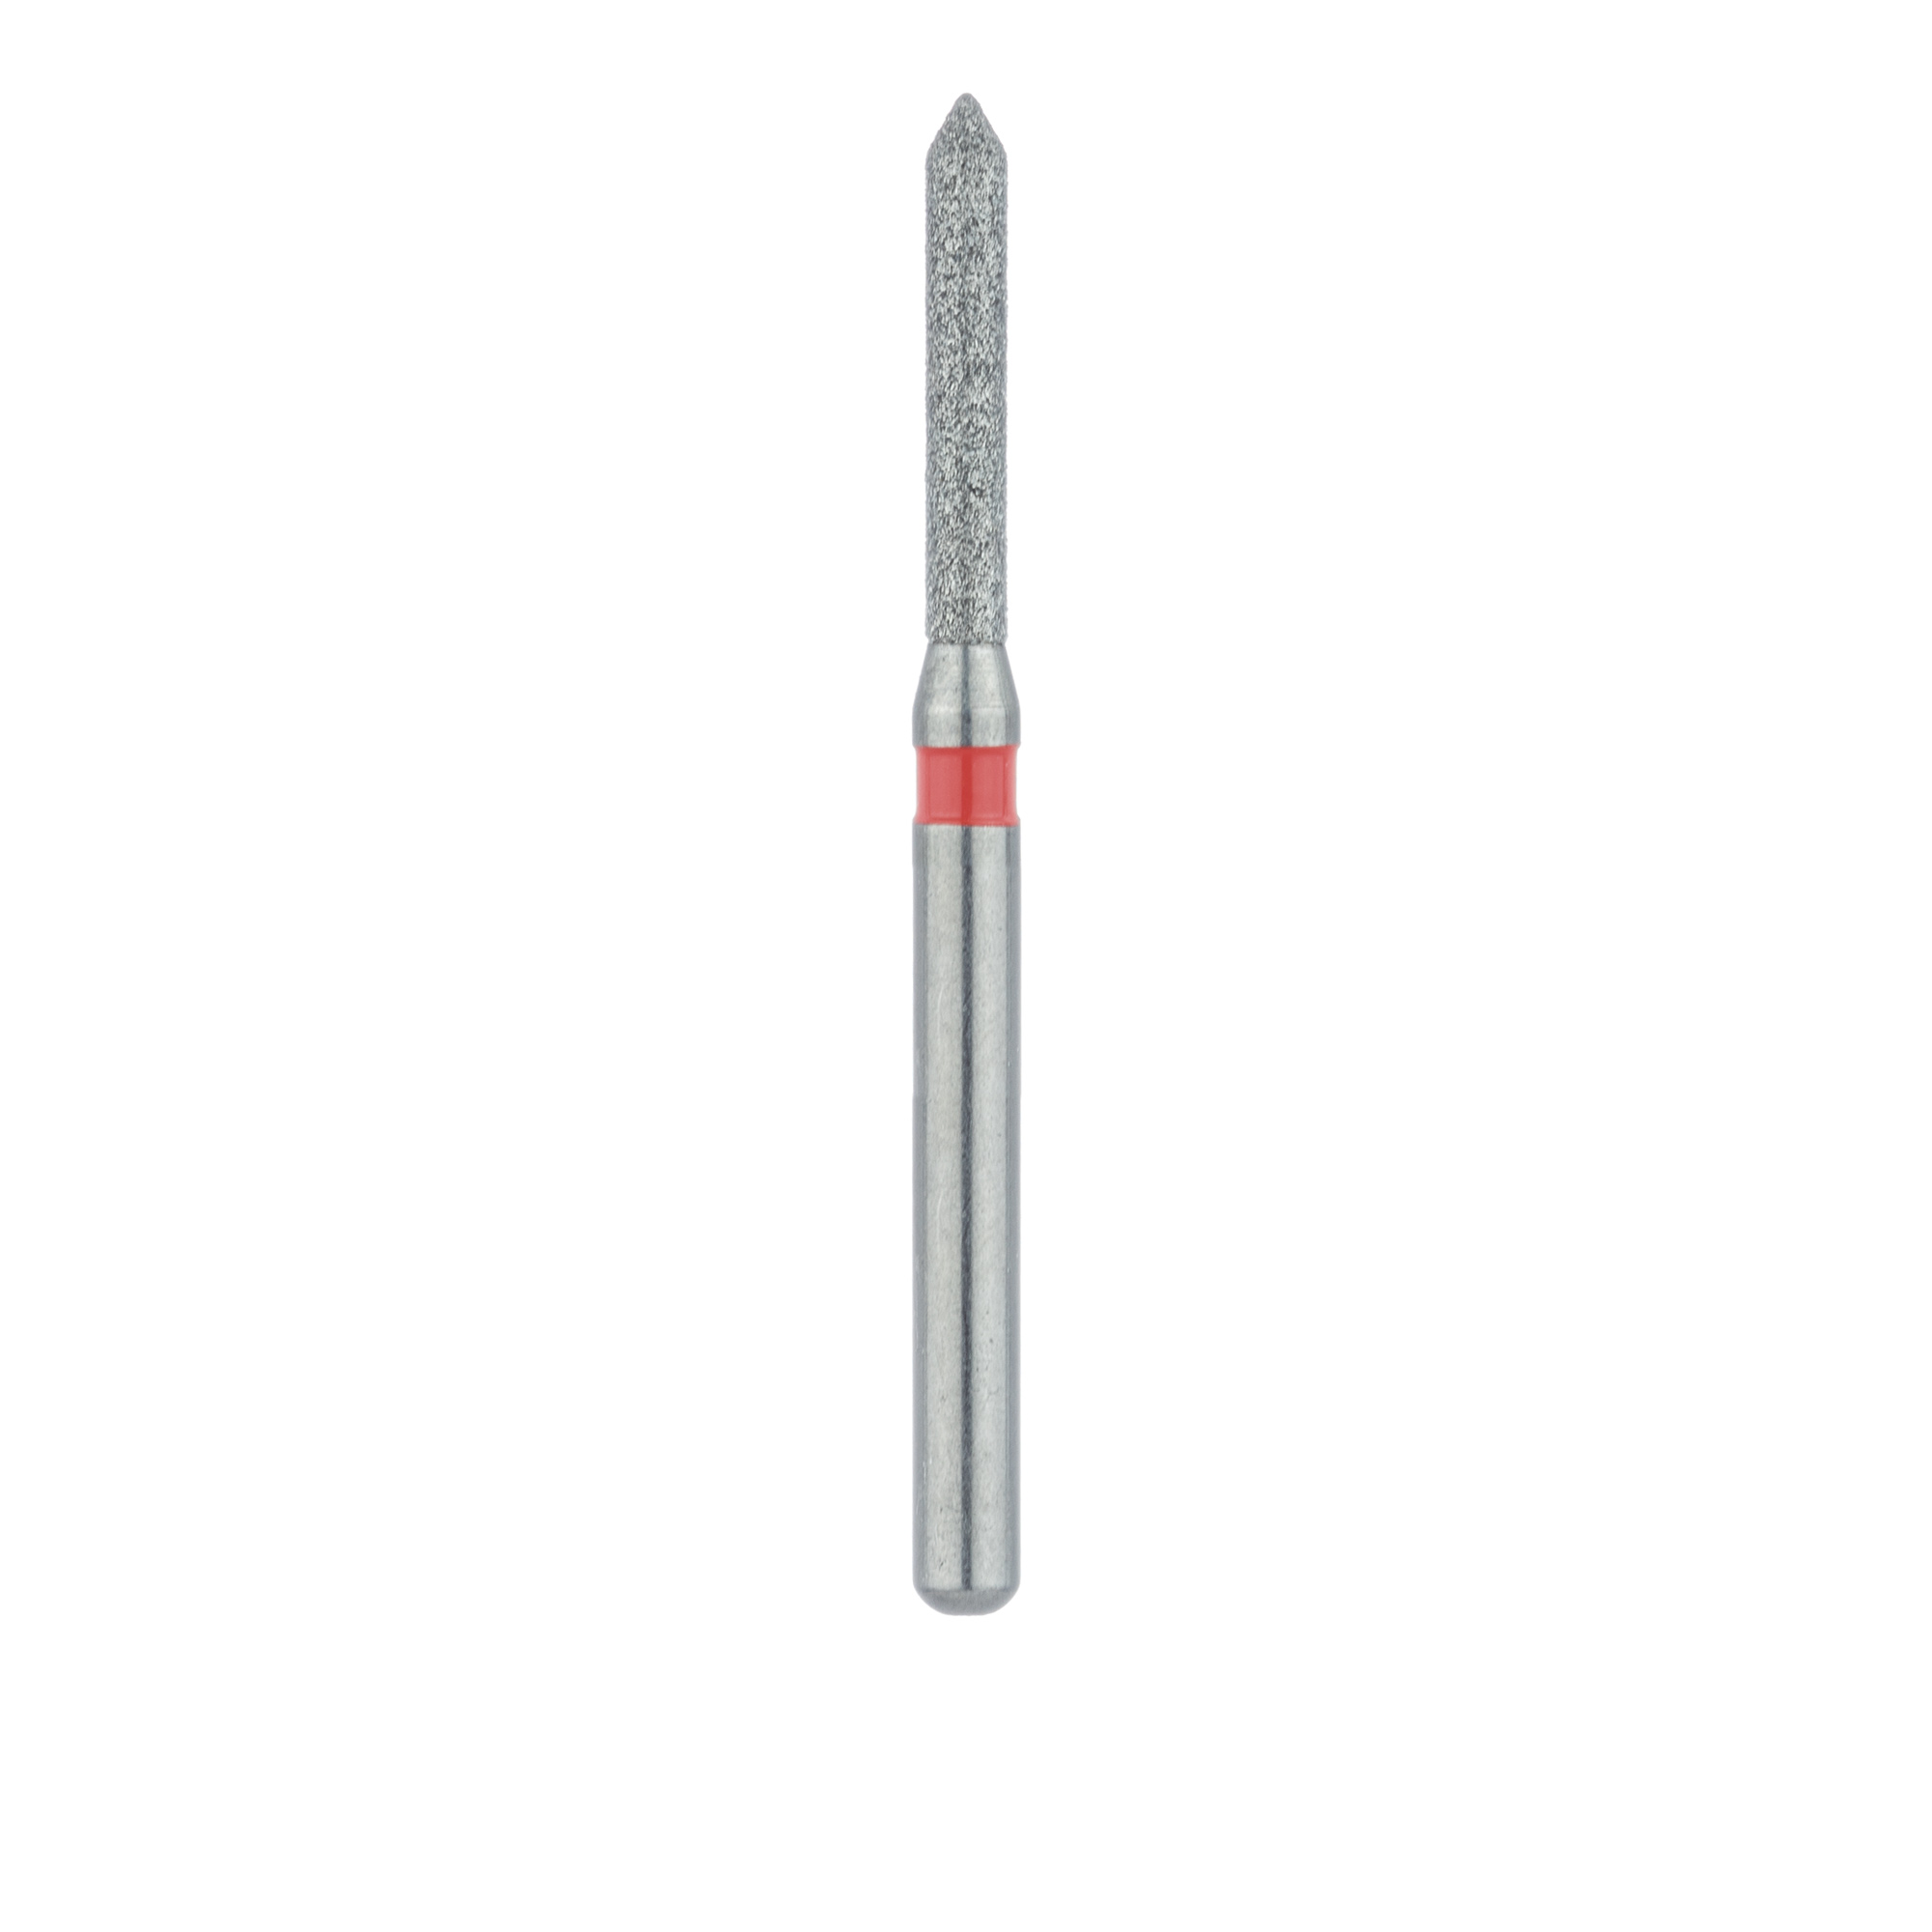 885F-012-FG Pointed Tip Cylinder Diamond Bur, 1.2mm Ø, Fine, FG